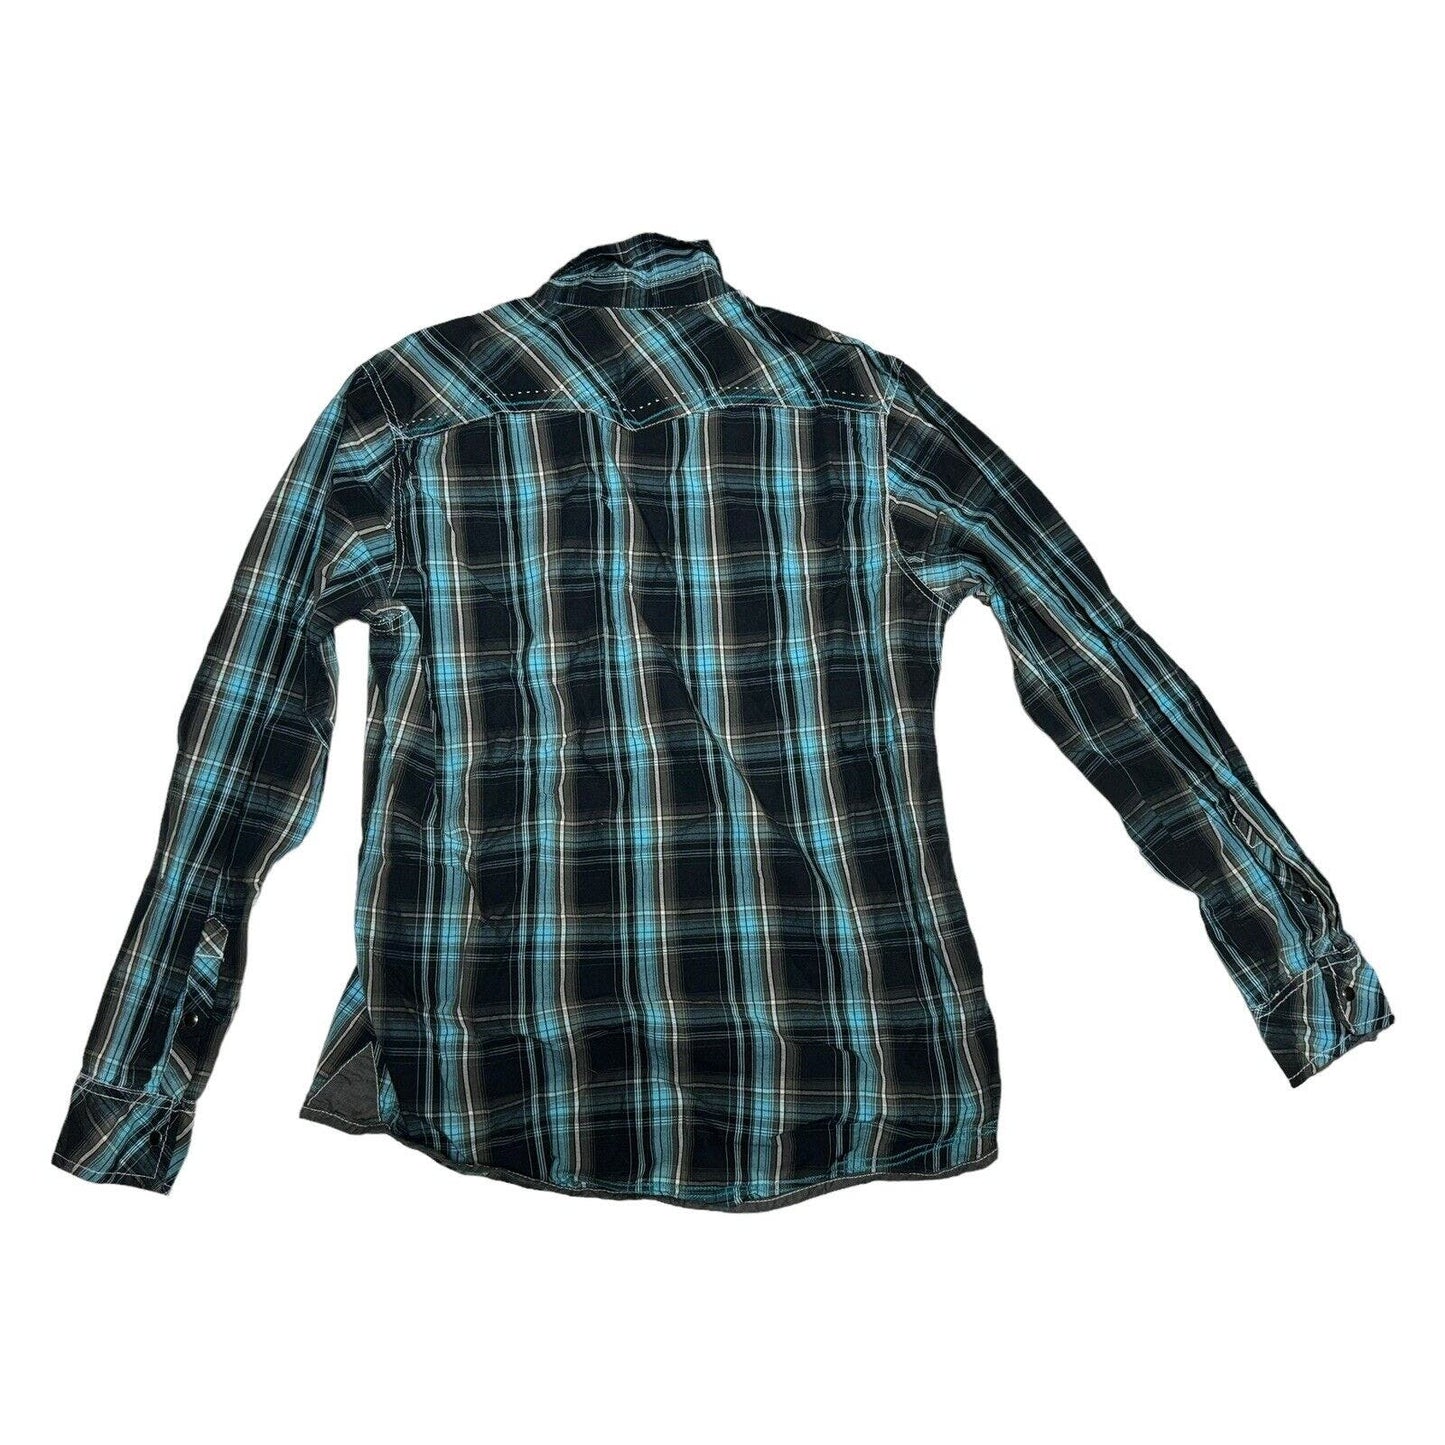 Buckle BKE West Alton Blue Plaid Long Sleeve Shirt Pearl Snaps Medium B2230